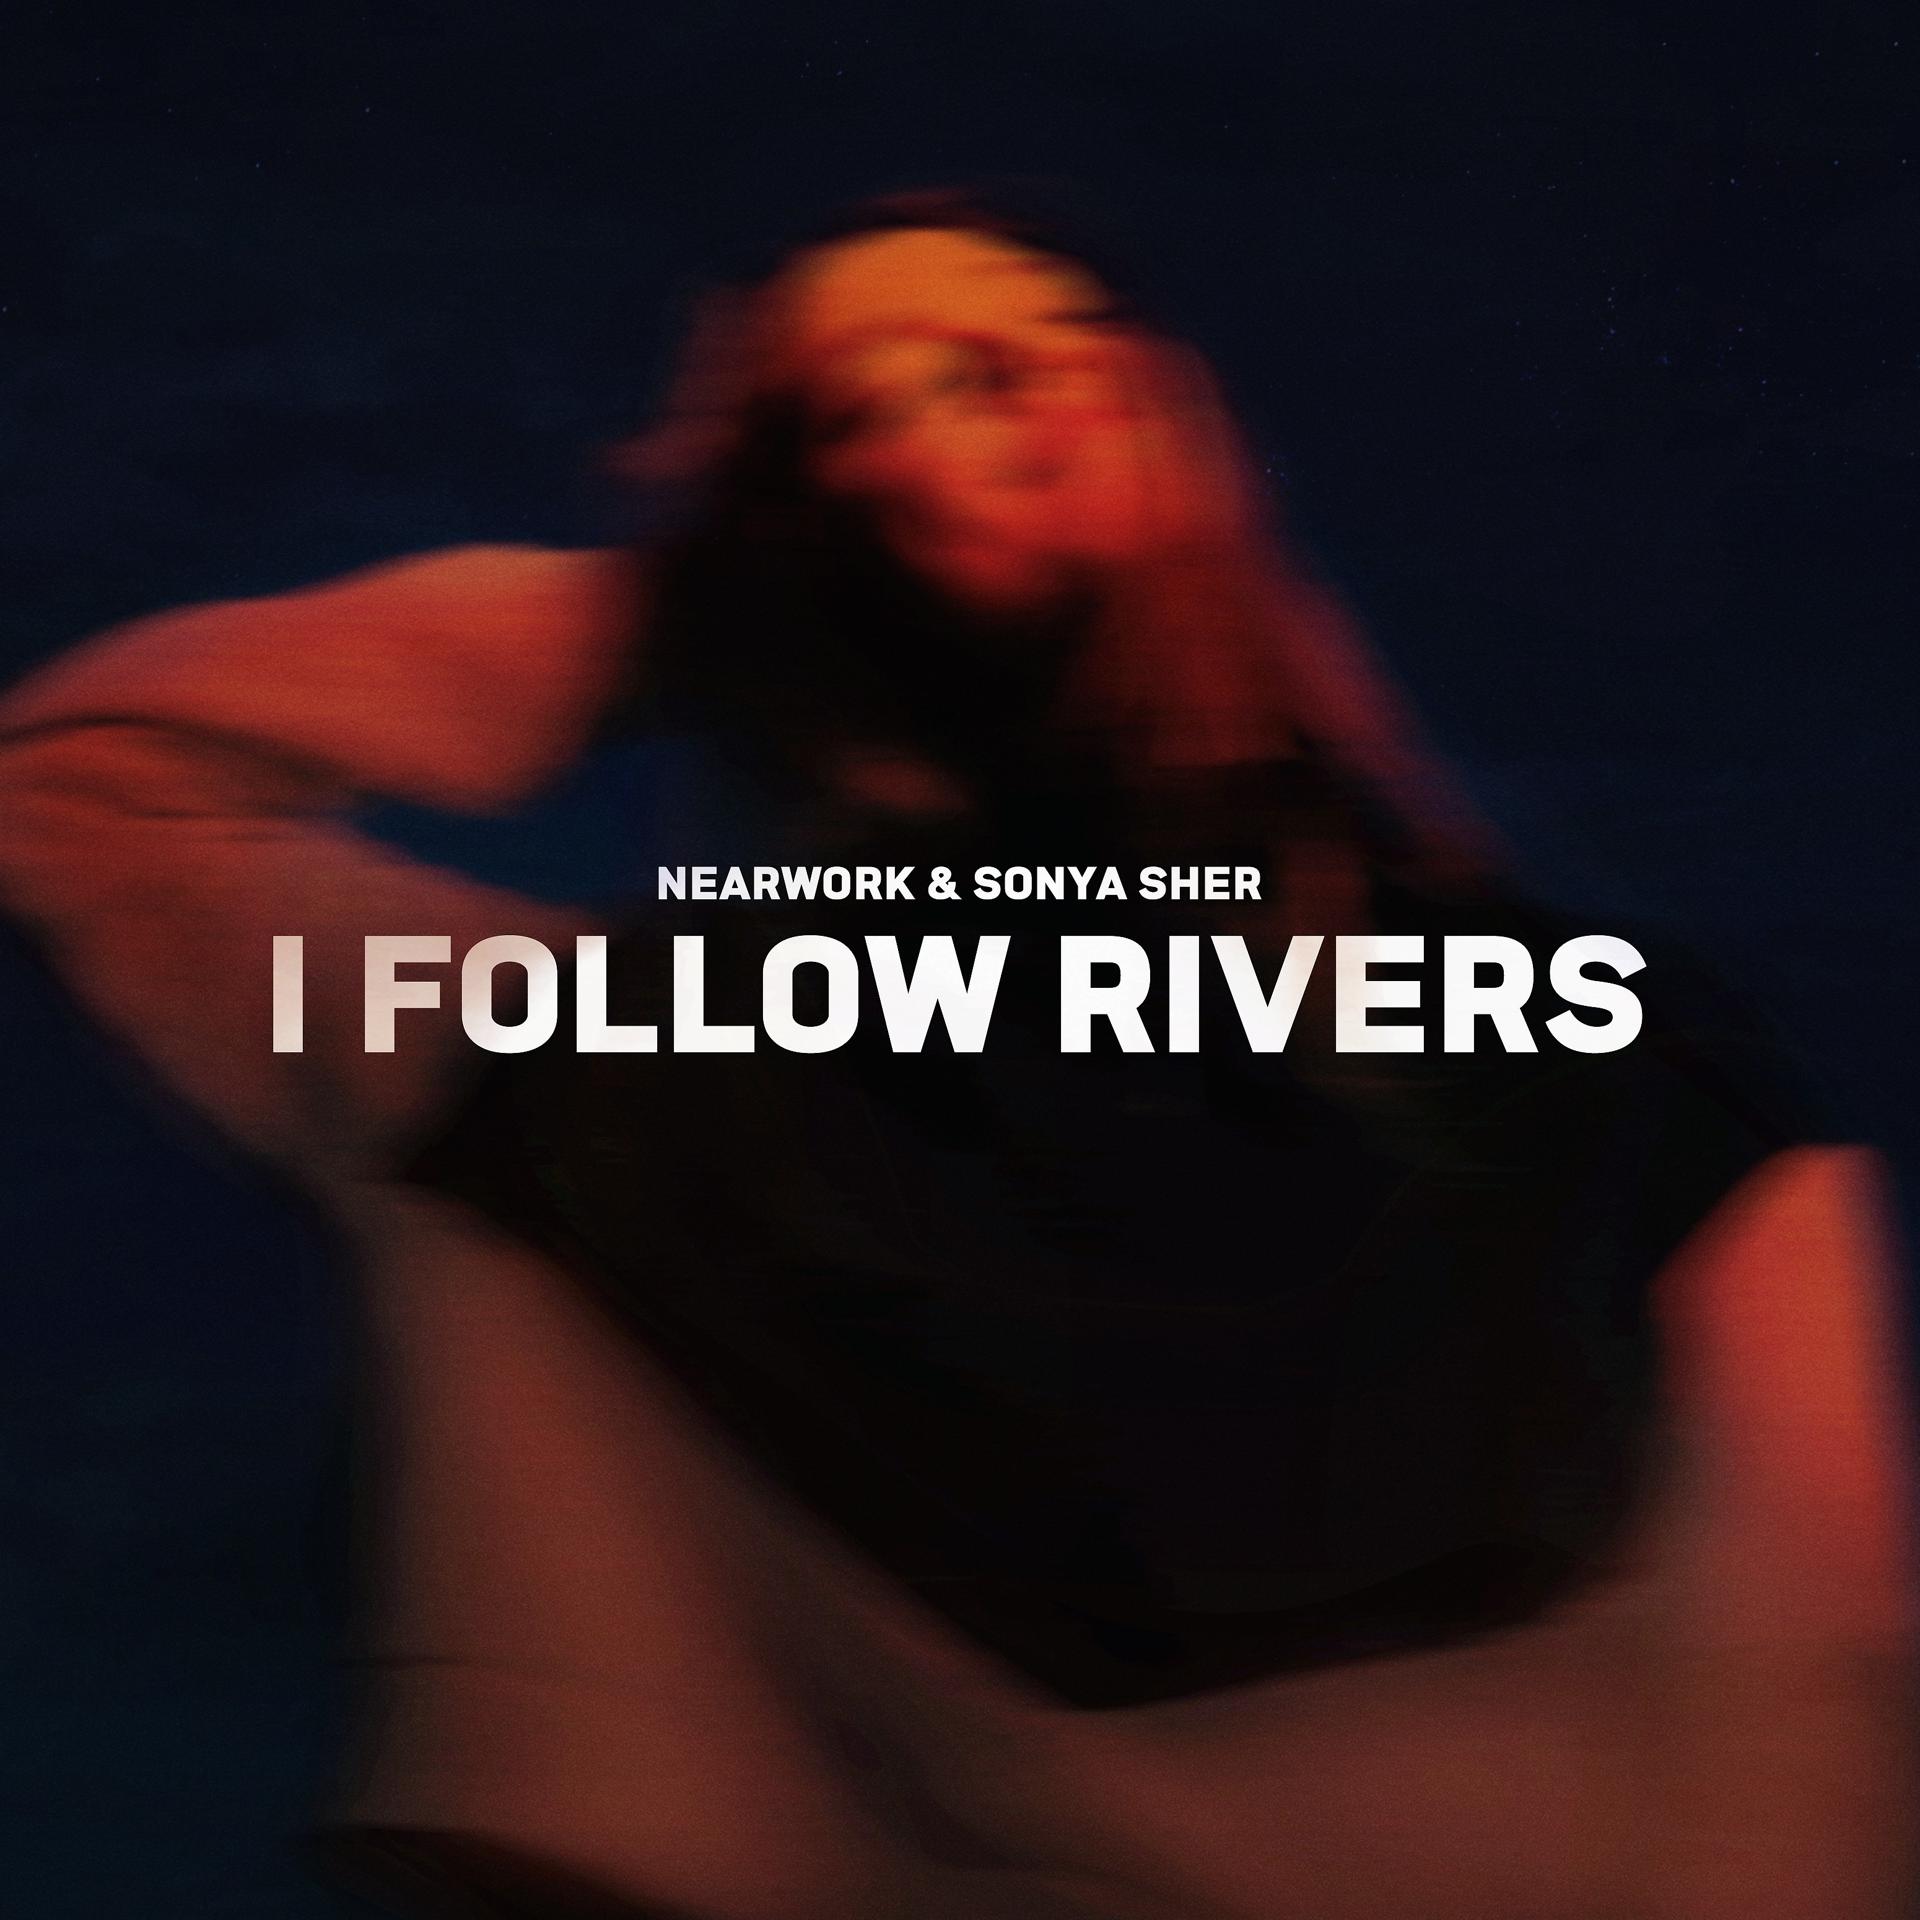 Постер к треку nearwork, Sonya Sher - I Follow Rivers